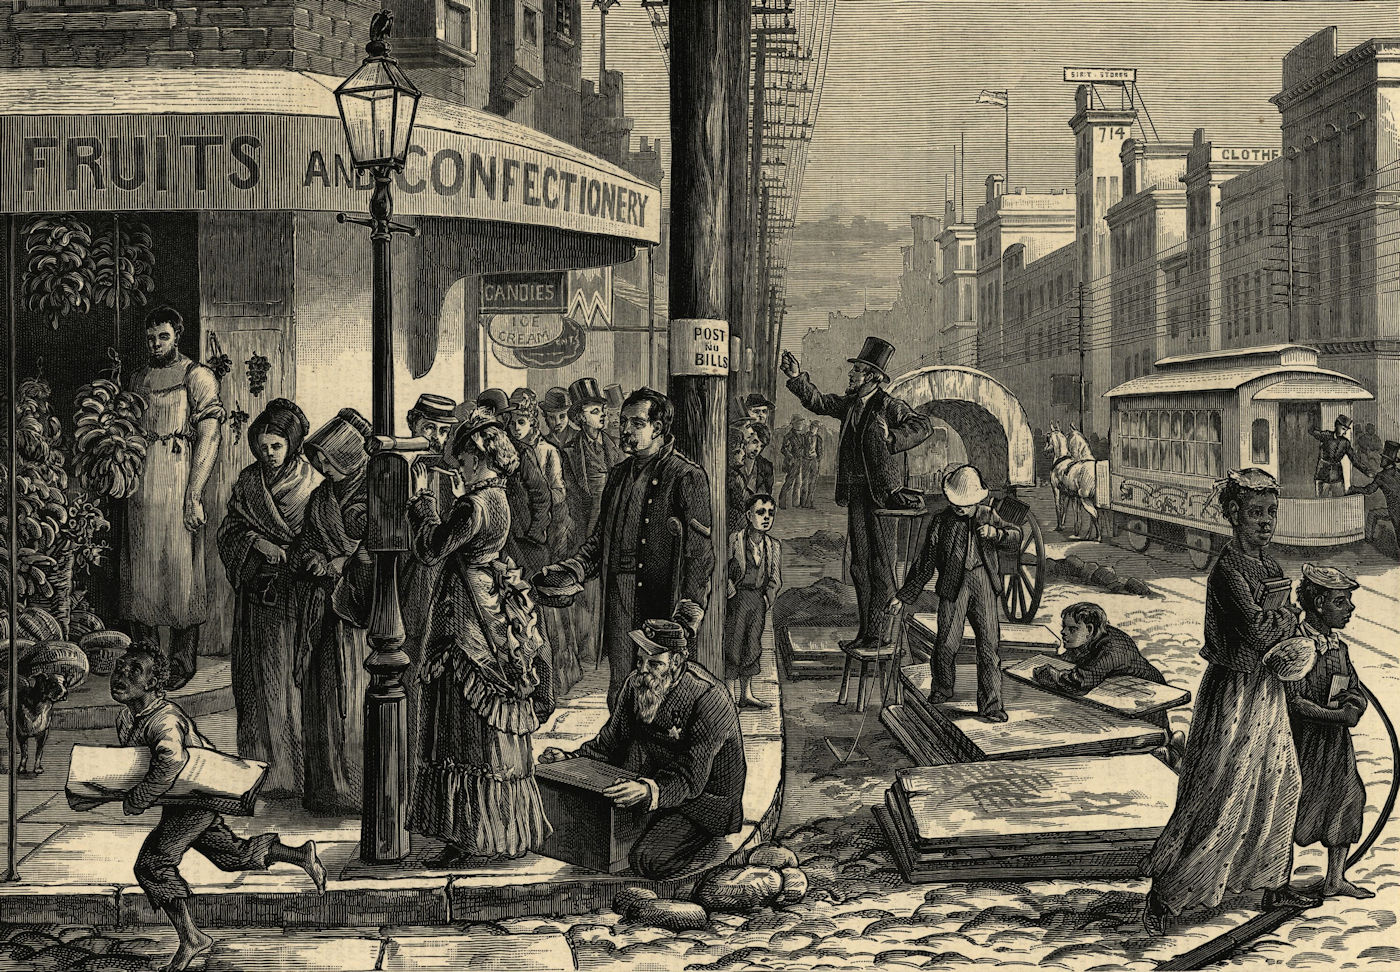 Associate Product The American Centennial Exhibition: Philadelphia street view. Pennsylvania 1876